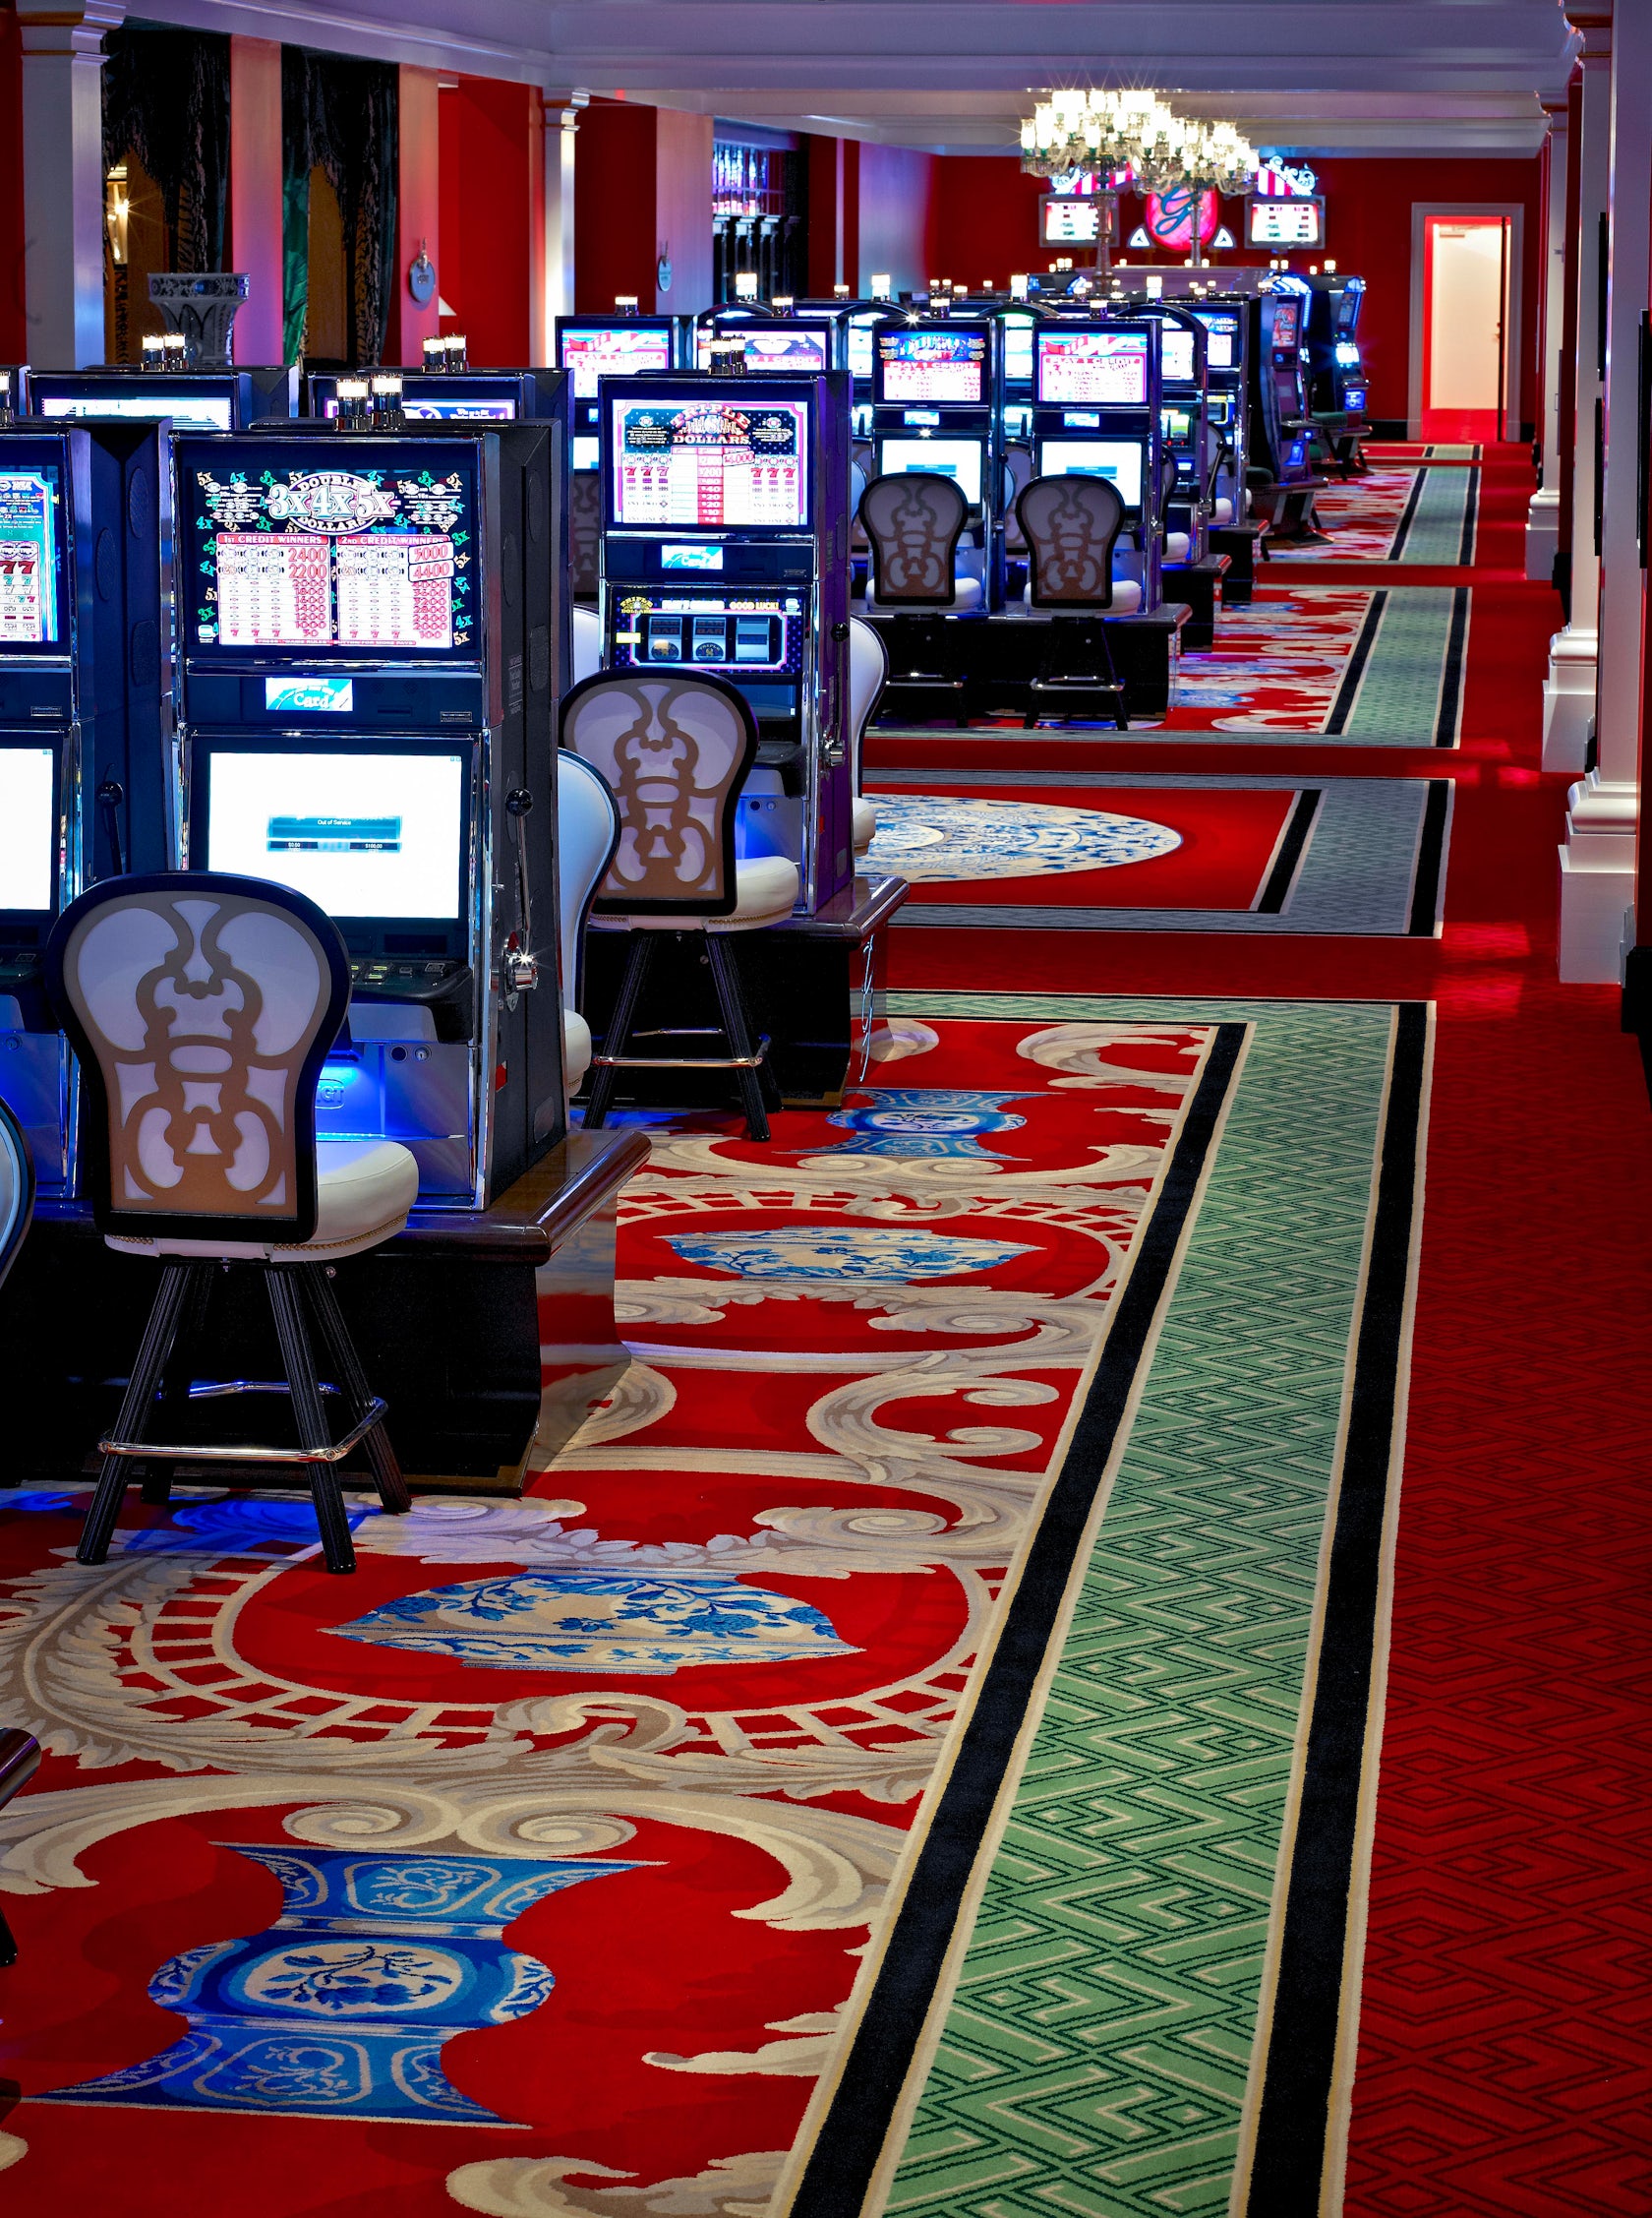 Casino Club Online Casino